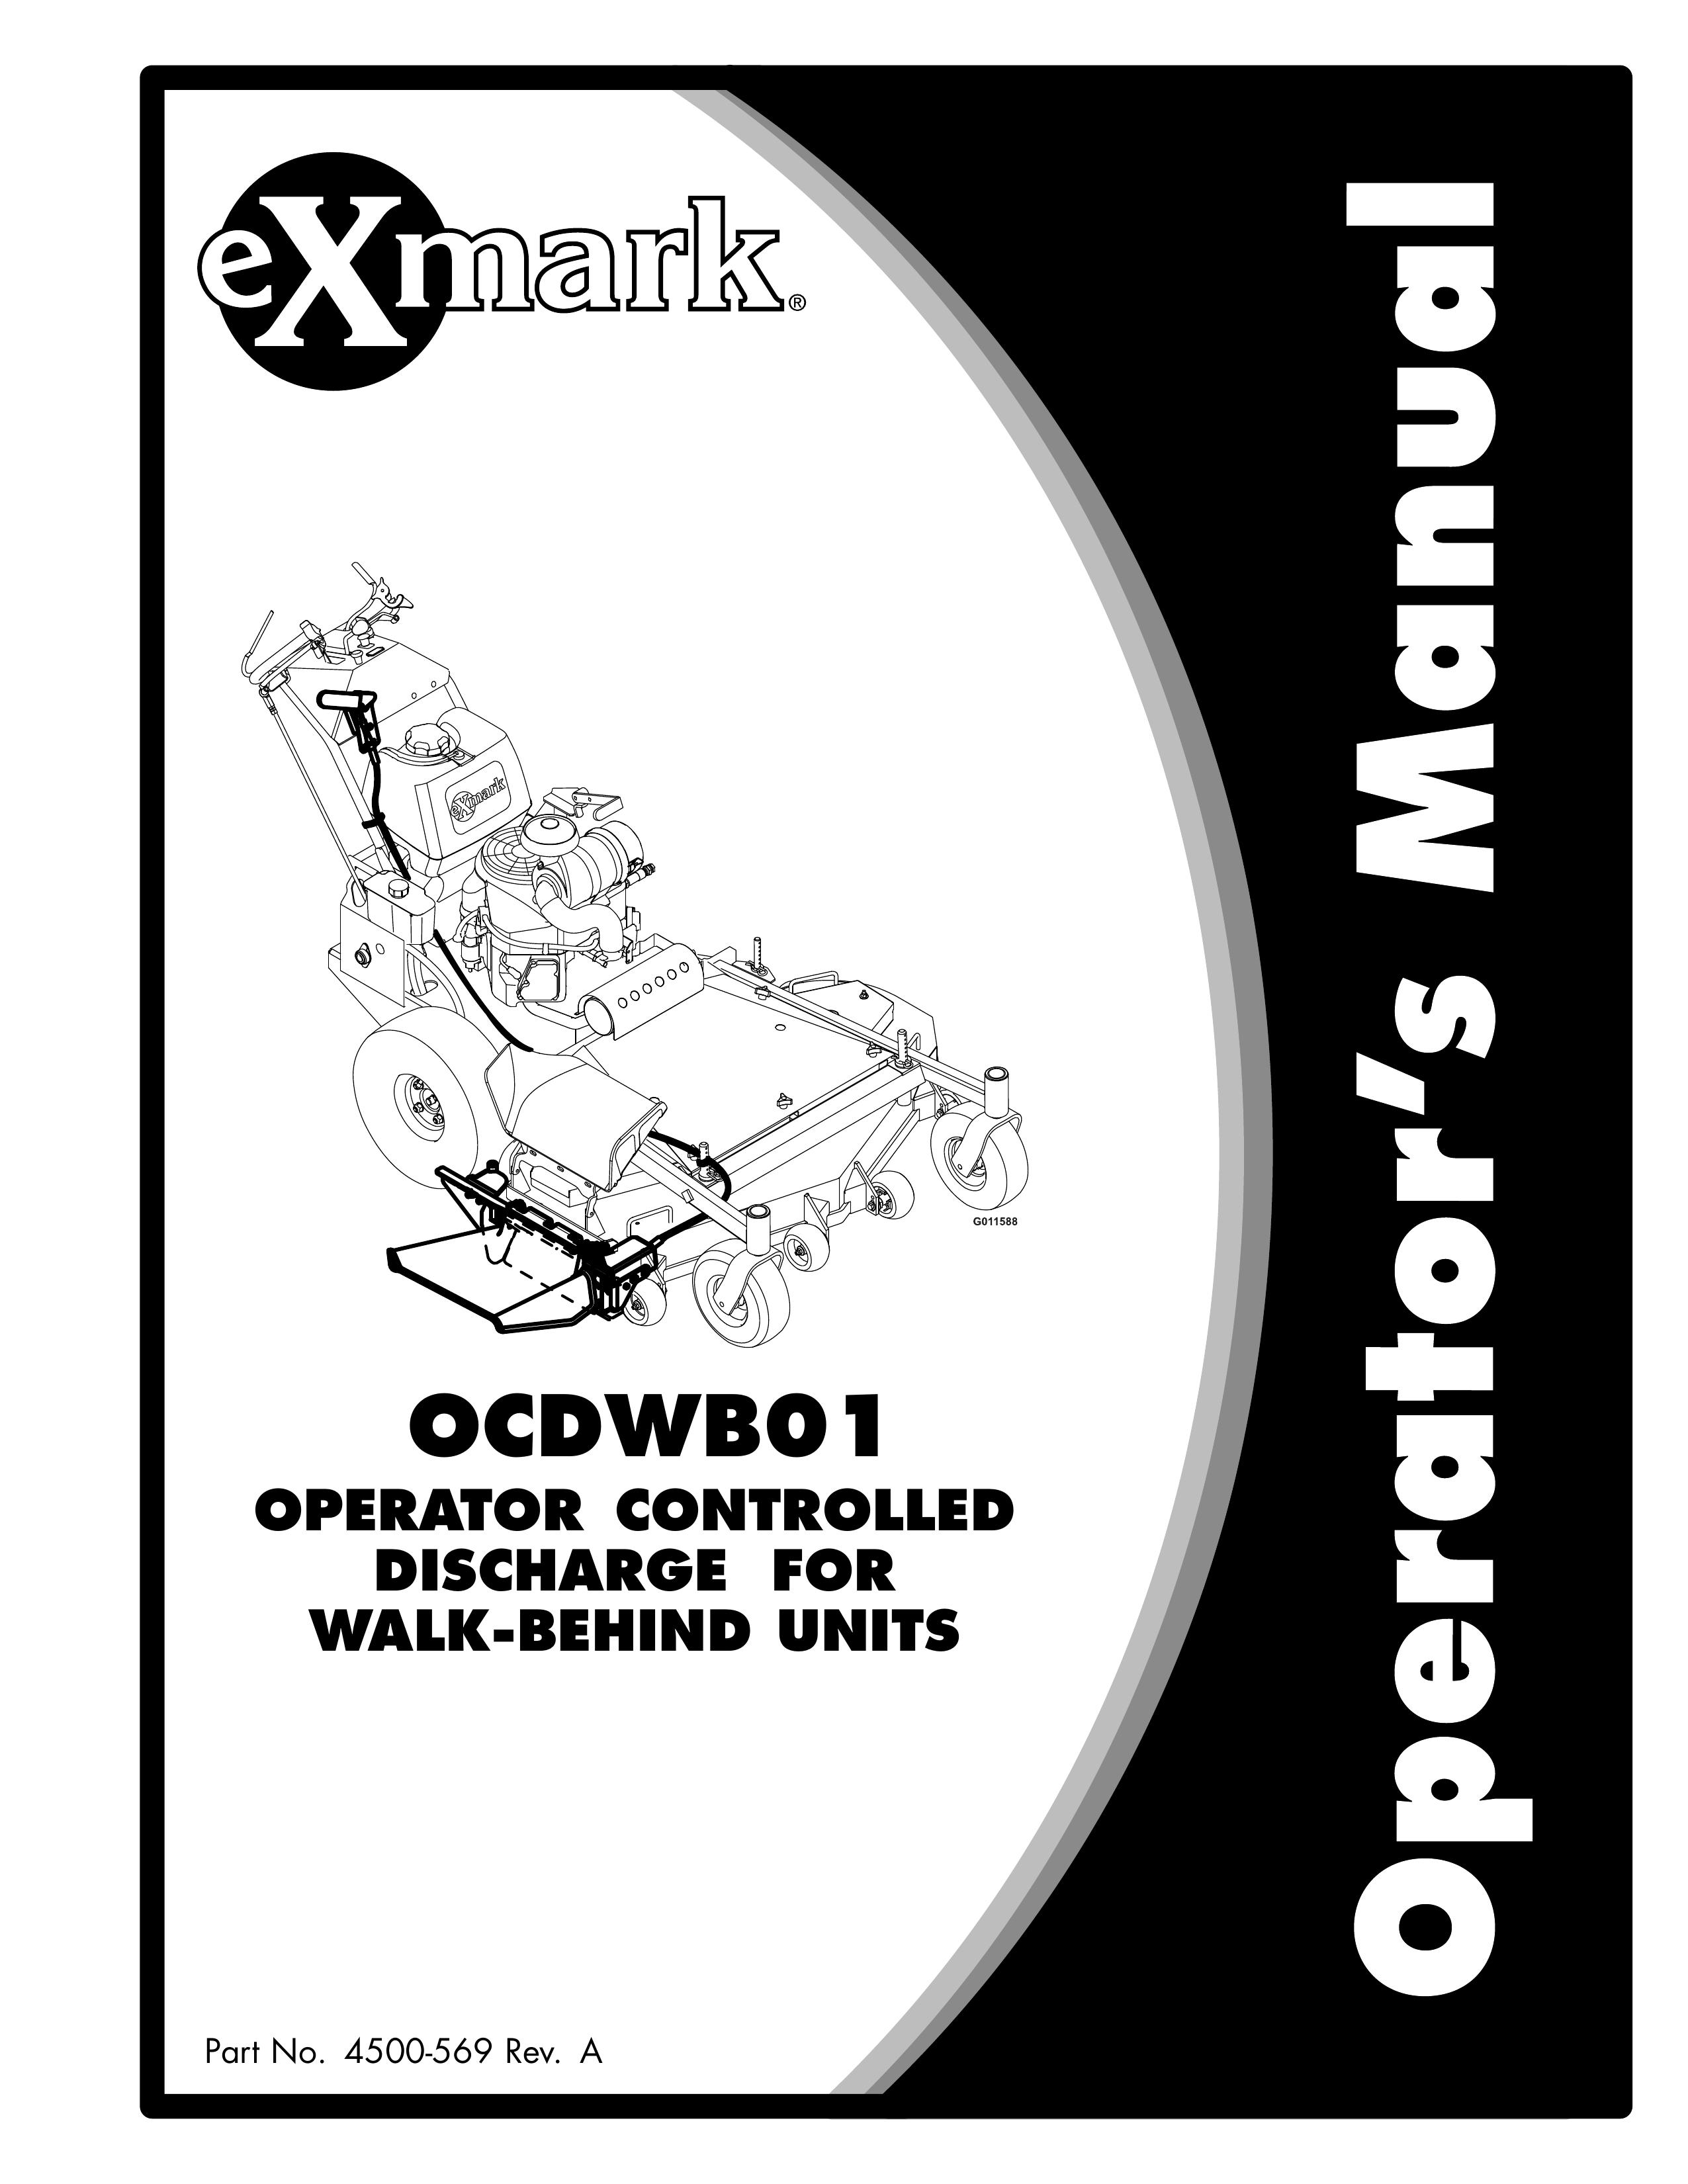 Exmark OCDWB01 Lawn Aerator User Manual